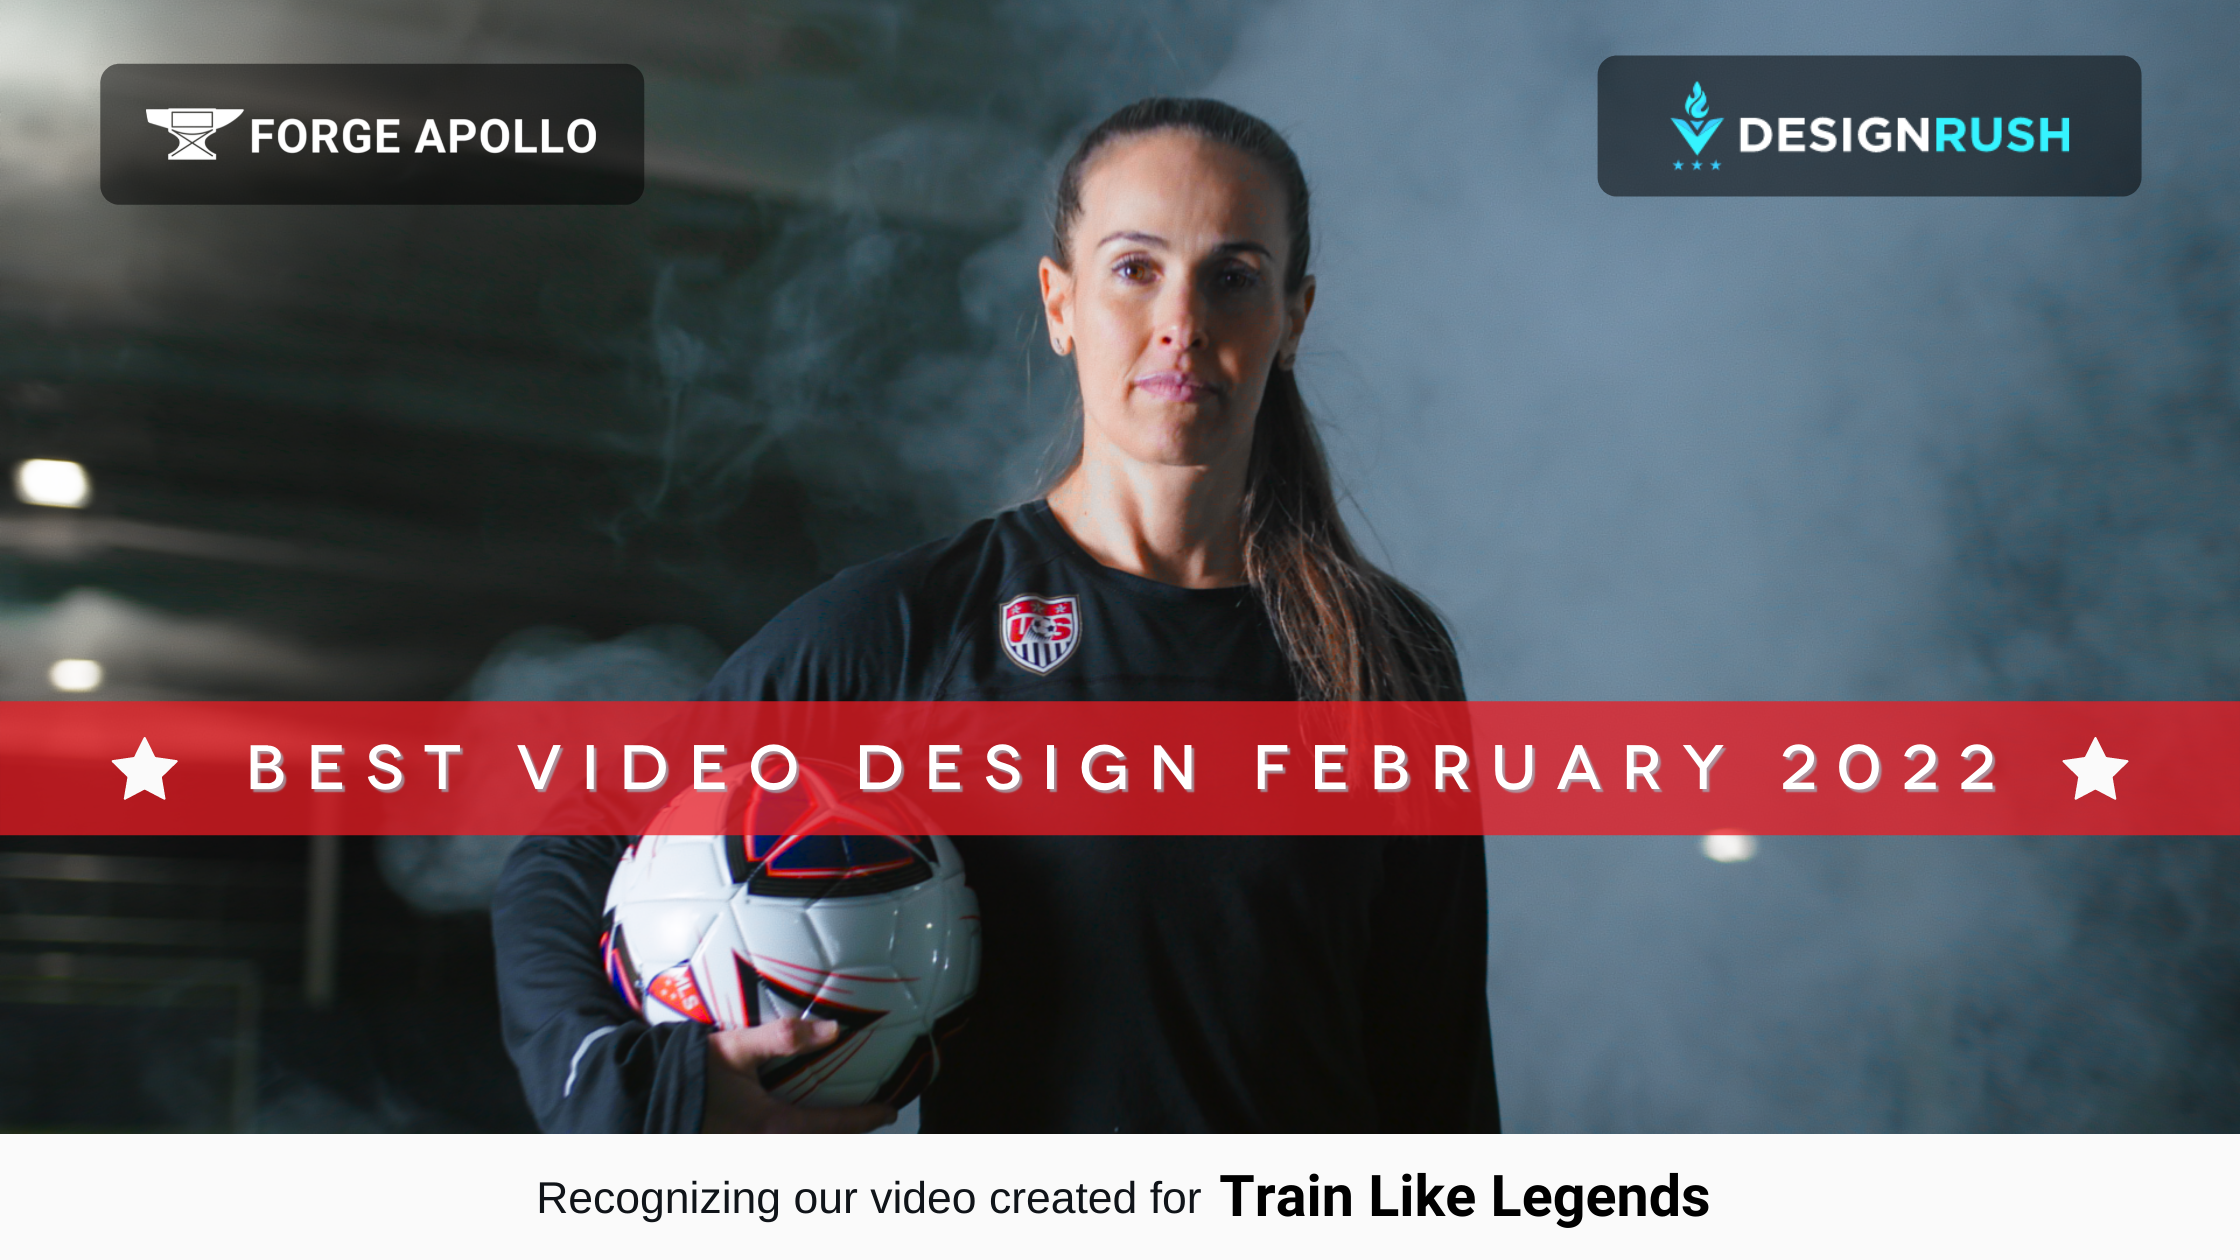 Best Video Design February 2022 Forge Apollo